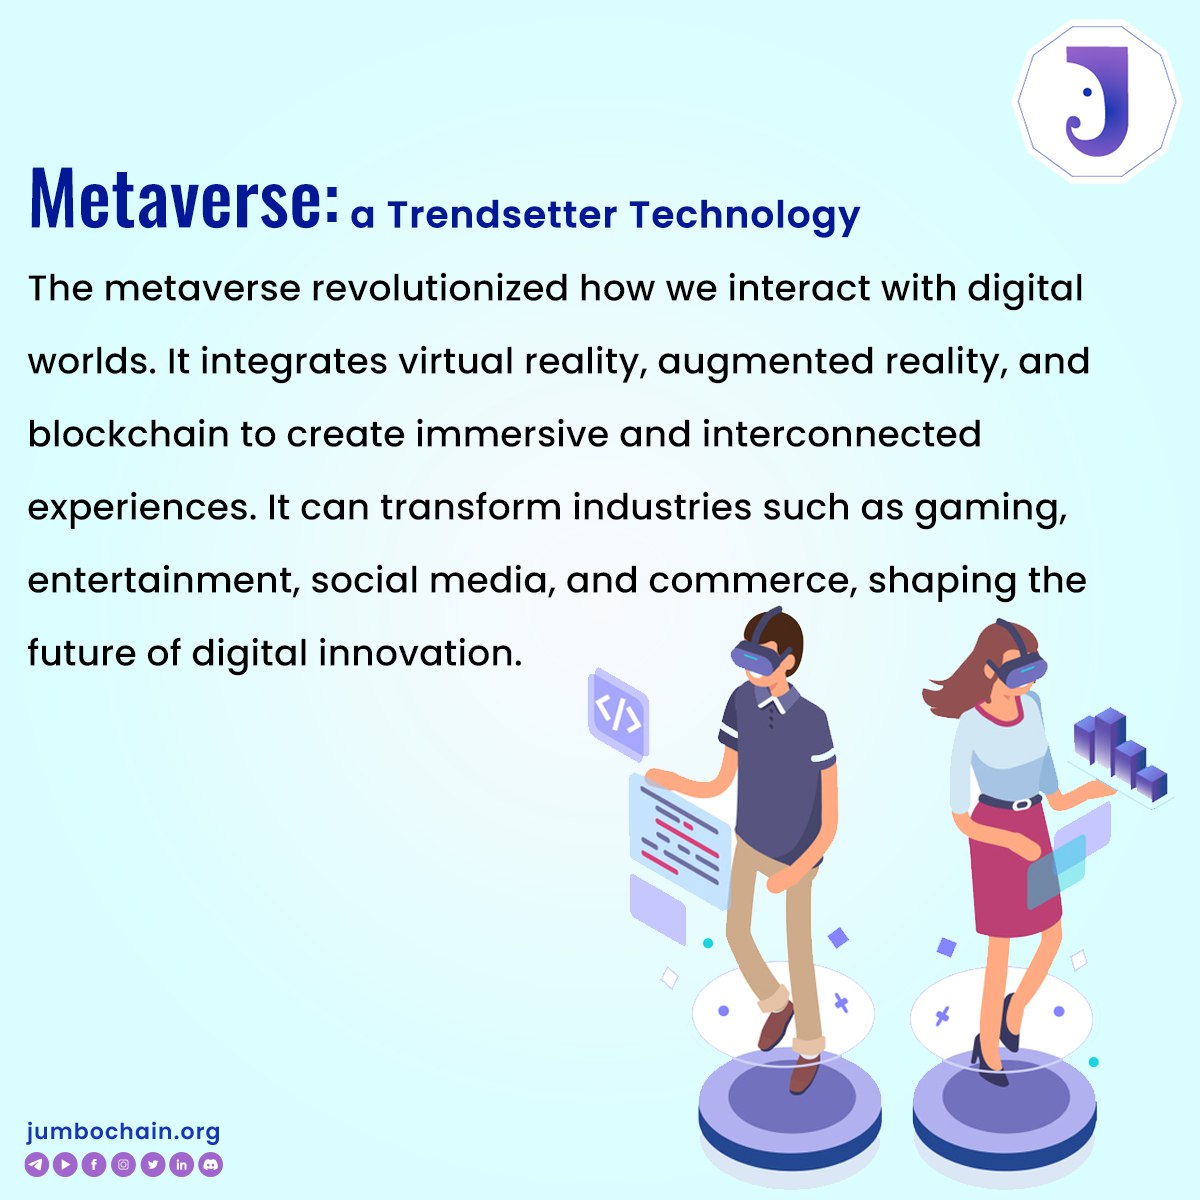 #Metaverse: a Trendsetter #technology
.
.
.
Visit Jumbochain.org 

#jumbochain #Blockchain #carbonfootprint #technology #BTC #Decentralization #future #NFT #SmartContracts #DeFi #startup #innovation #BlockchainRevolution #Web3 #SustainableFuture #ESG #SupplyChain #META